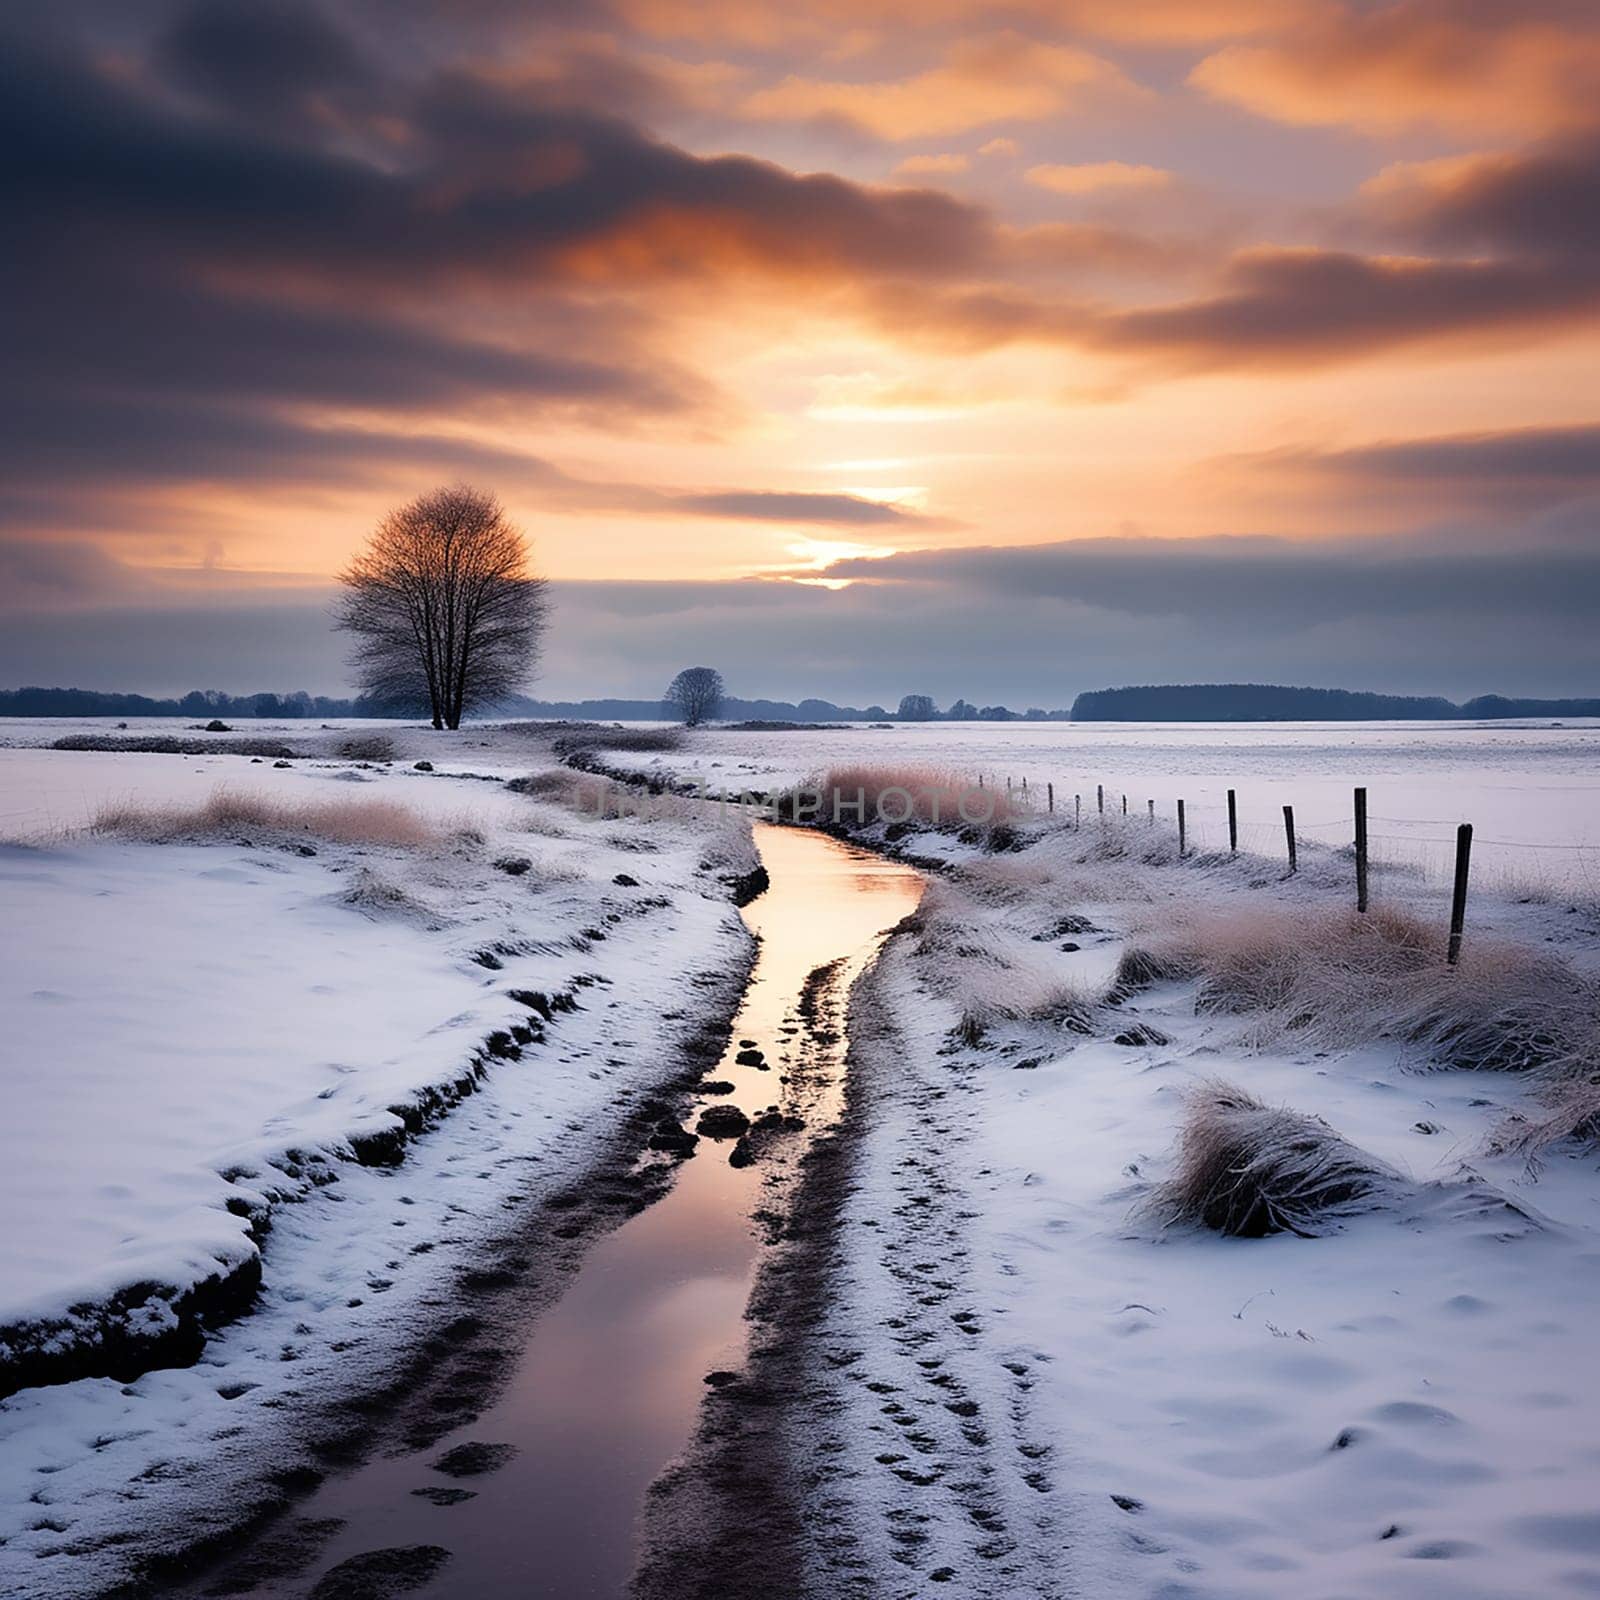 nowy Field and Moody Sky in Calm Winter Landscape